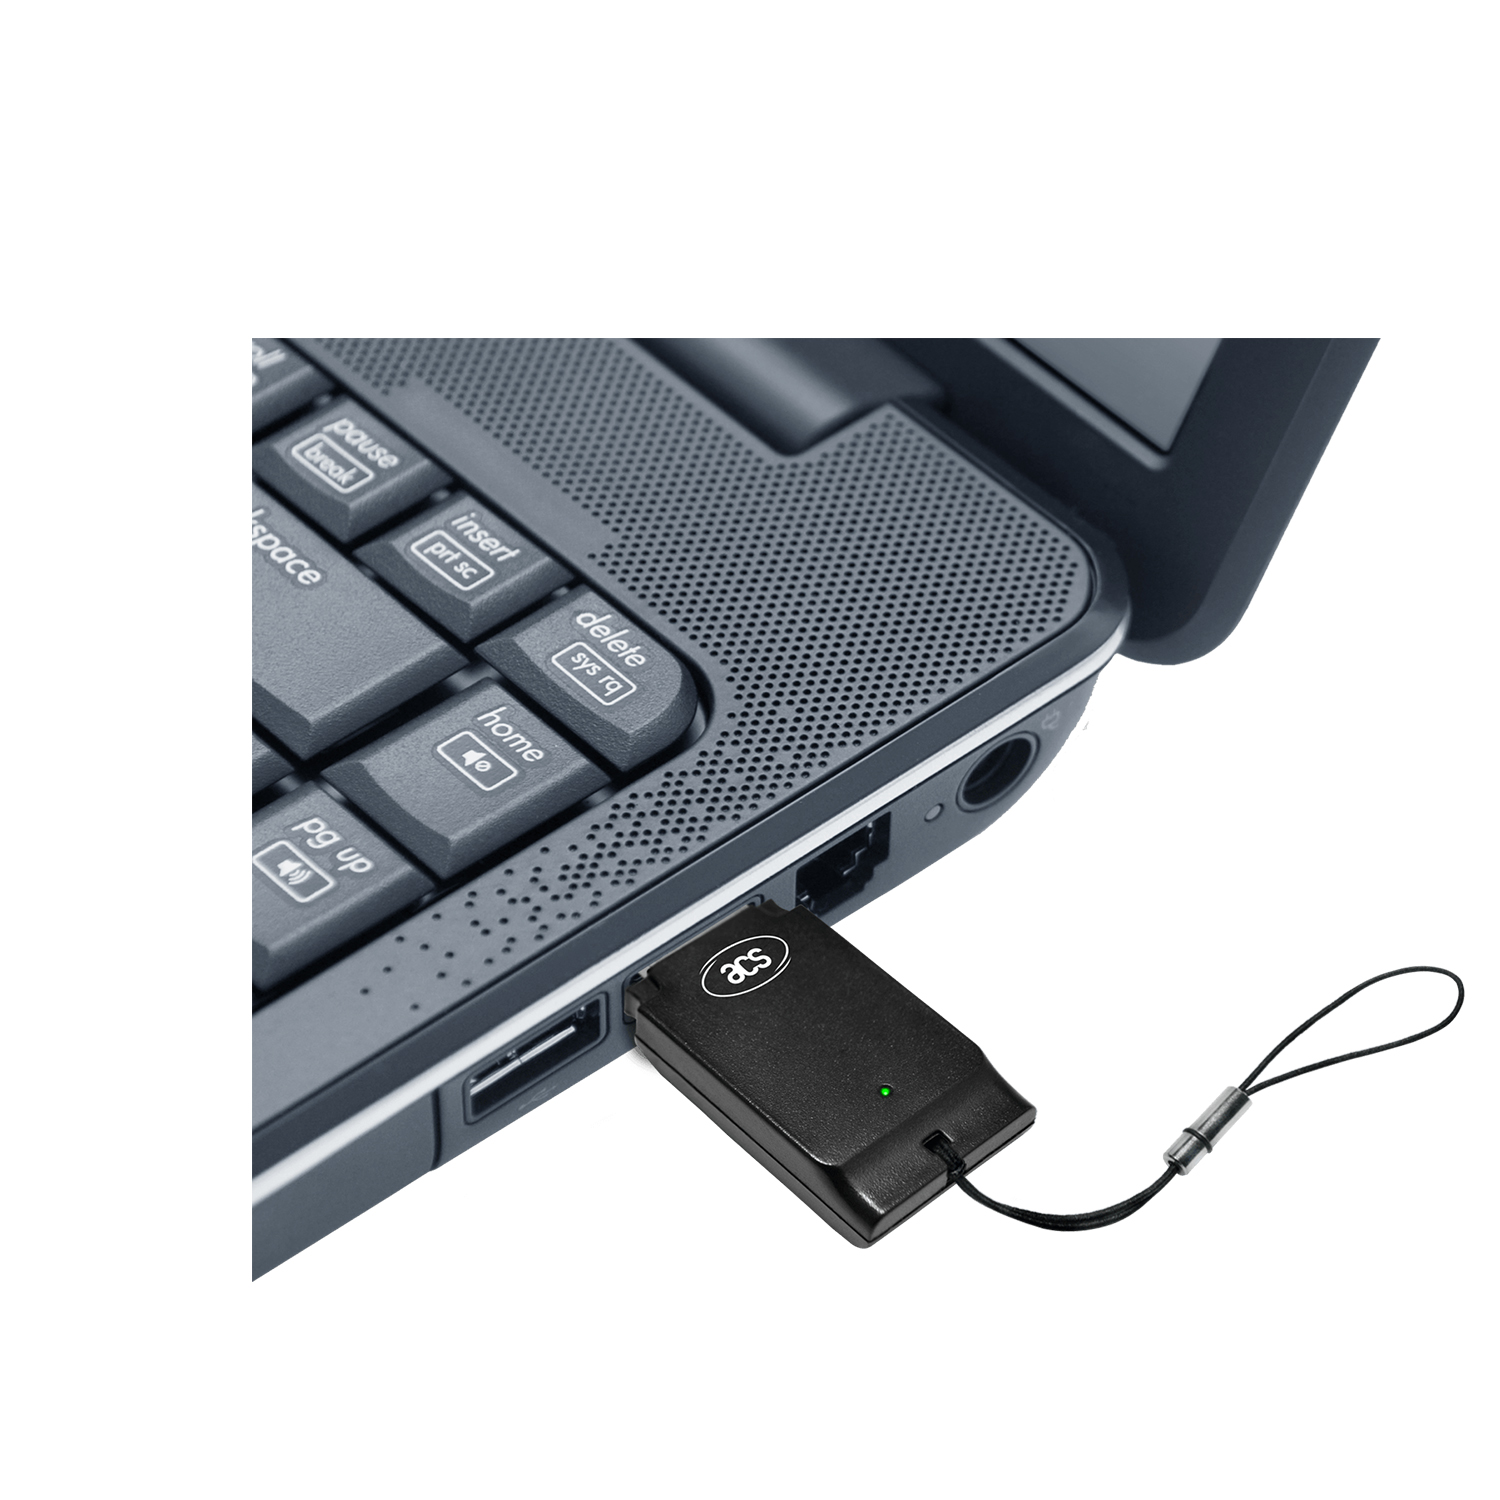 ACS ISO 7816 USB EMV Contact Smart Card Reader ACR39T-A1